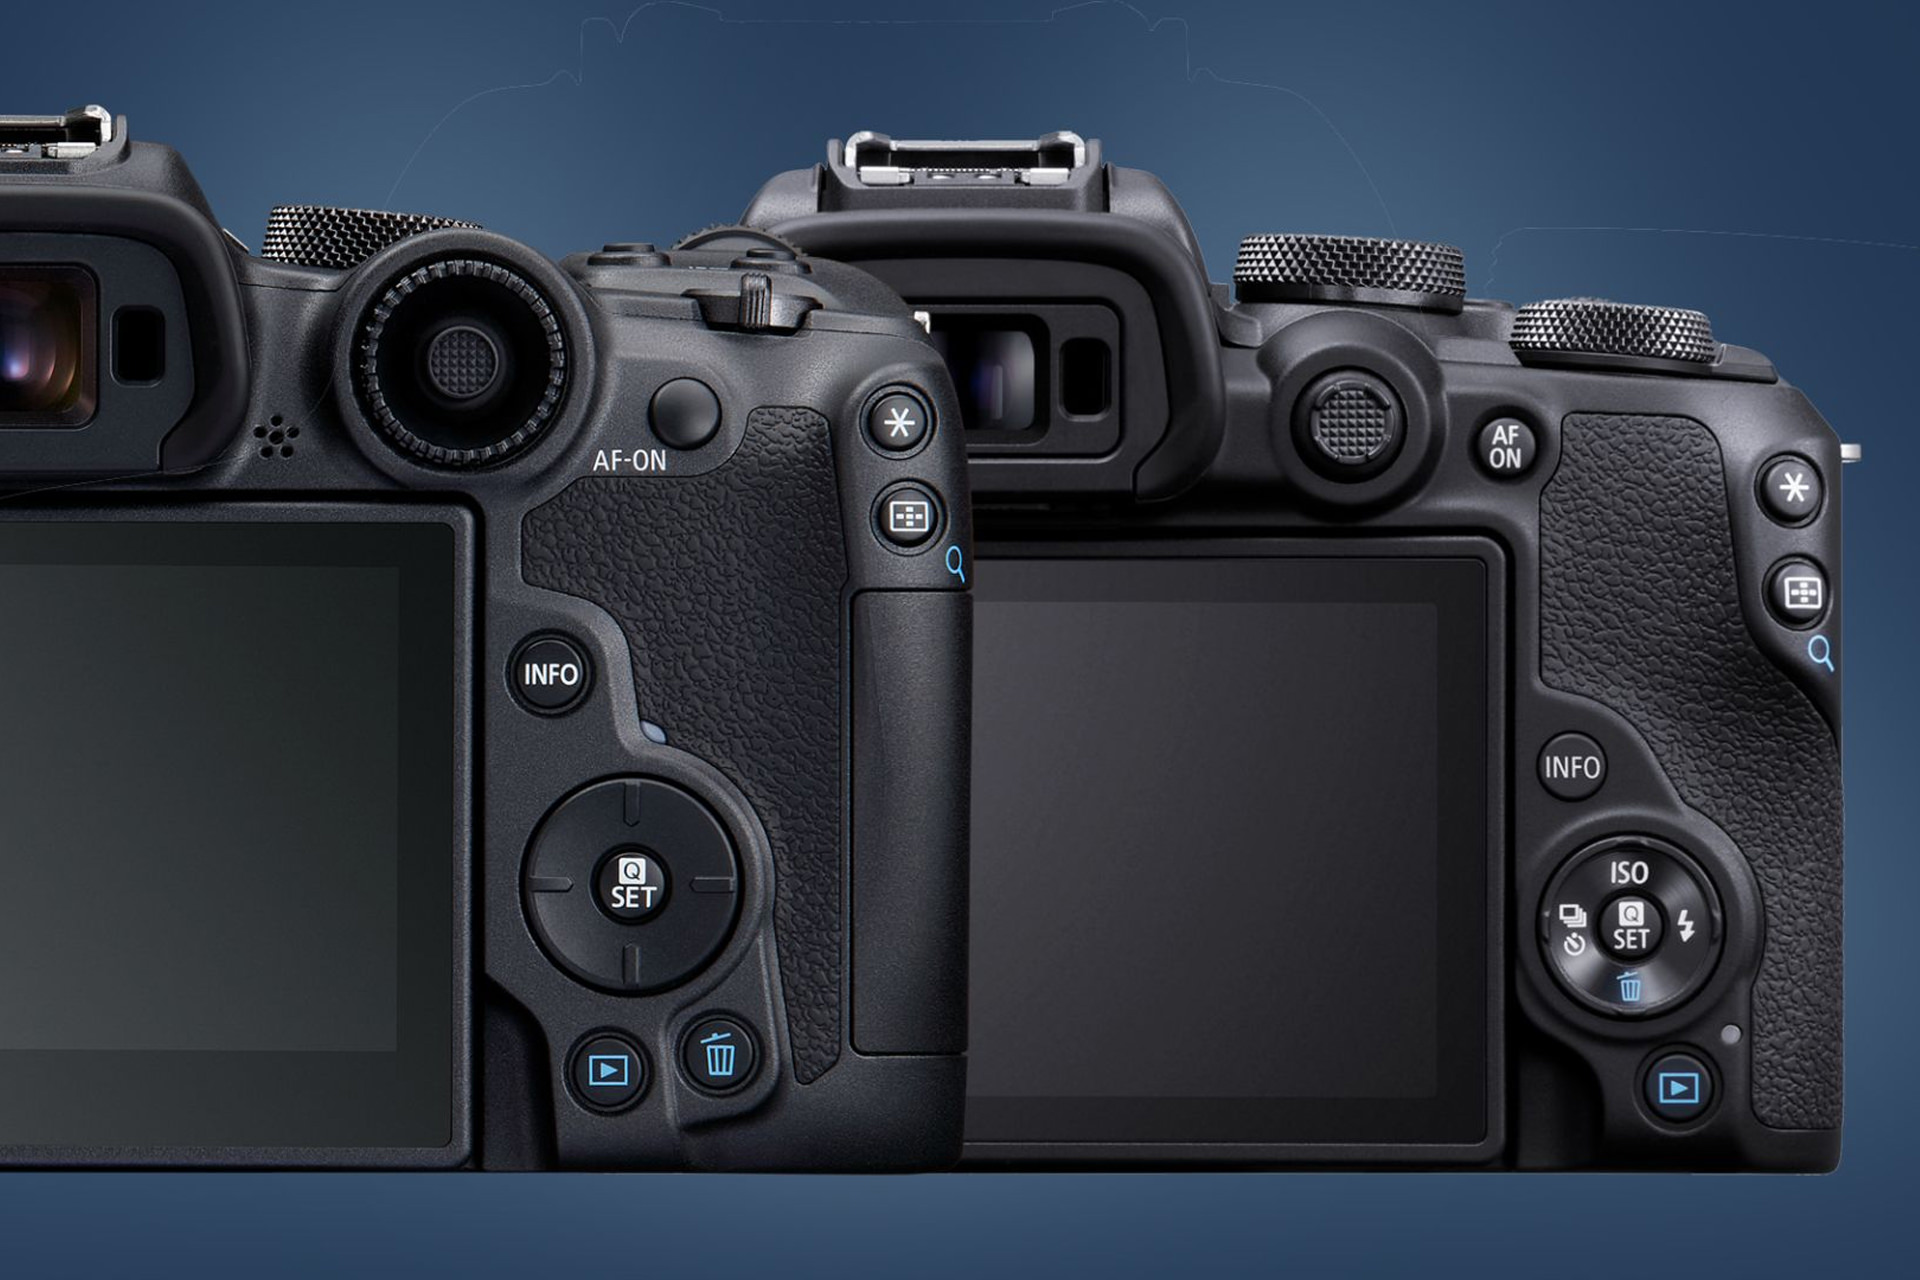 Conheça os novos scanners Canon: ImageFORMULA R10 e R40 - Netscan